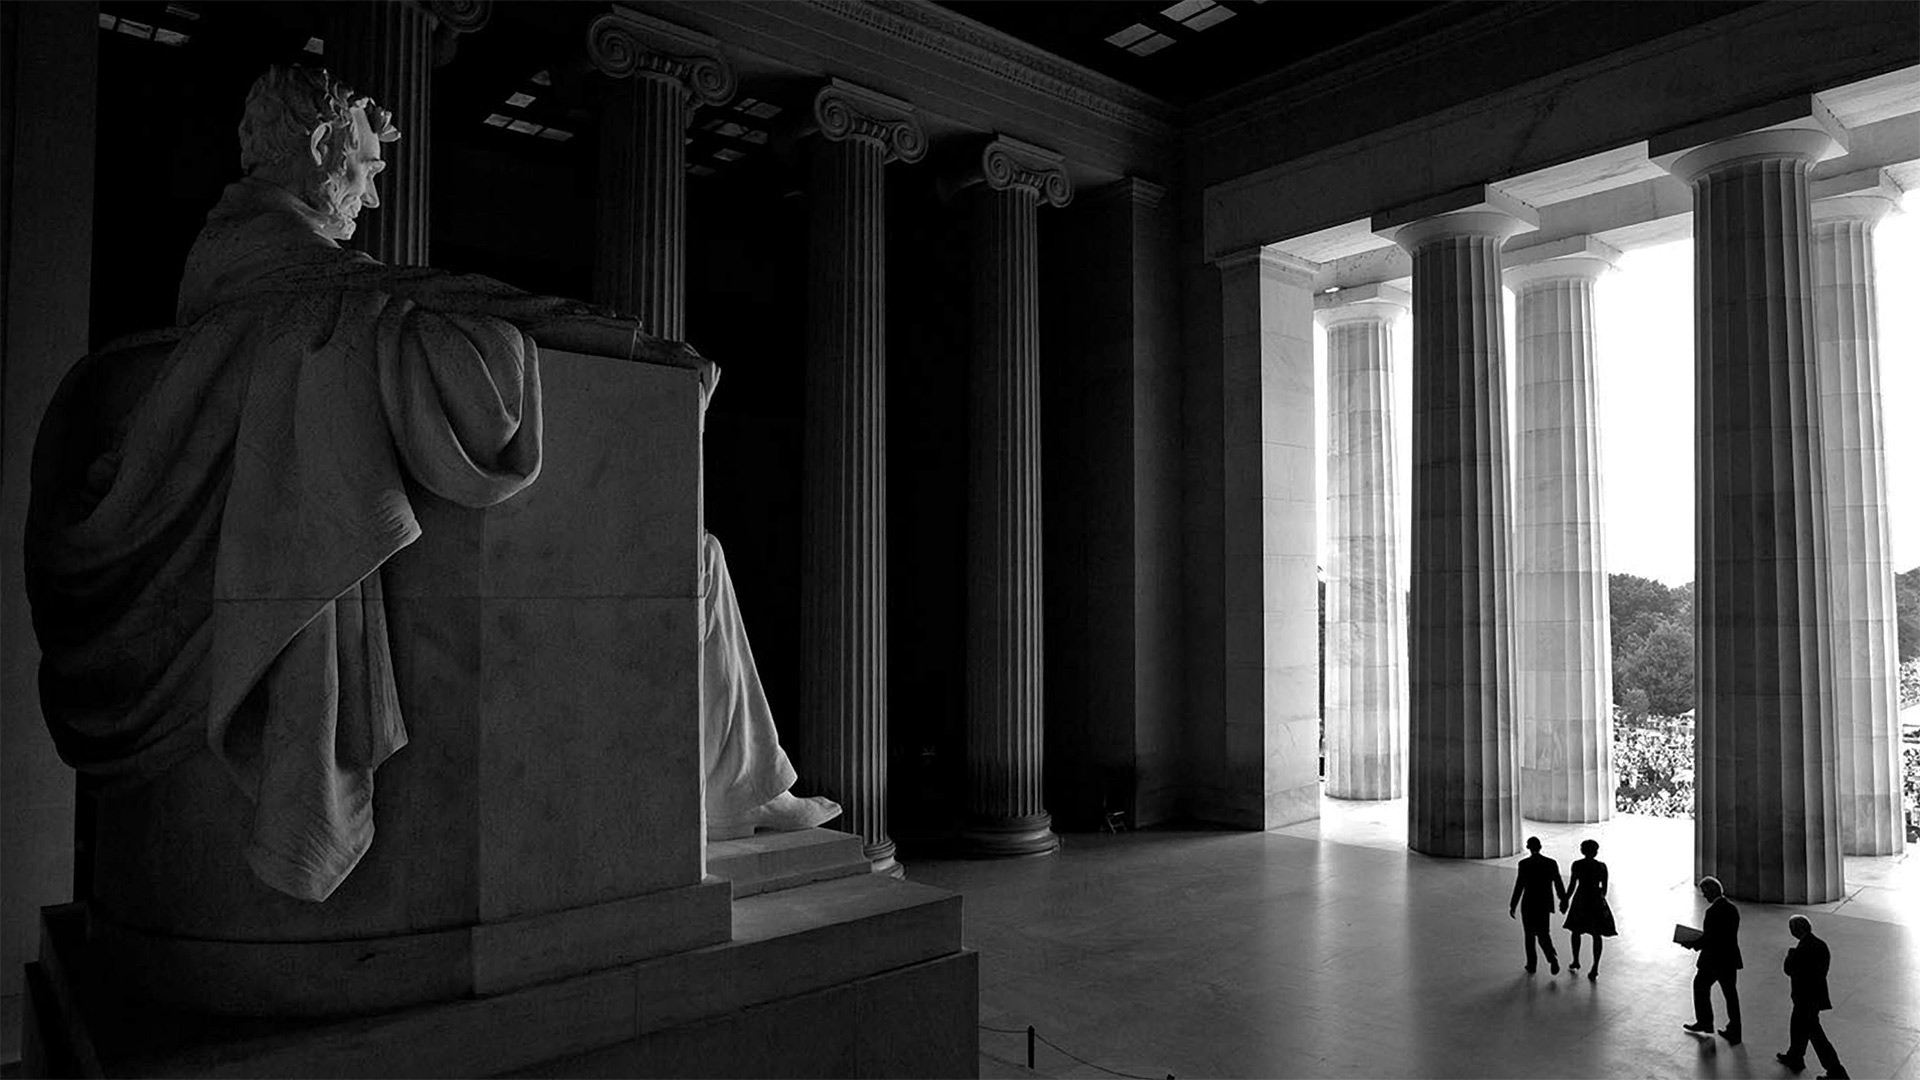 Lincoln Memorial in Washington, DC - White House Photo/Alamy)